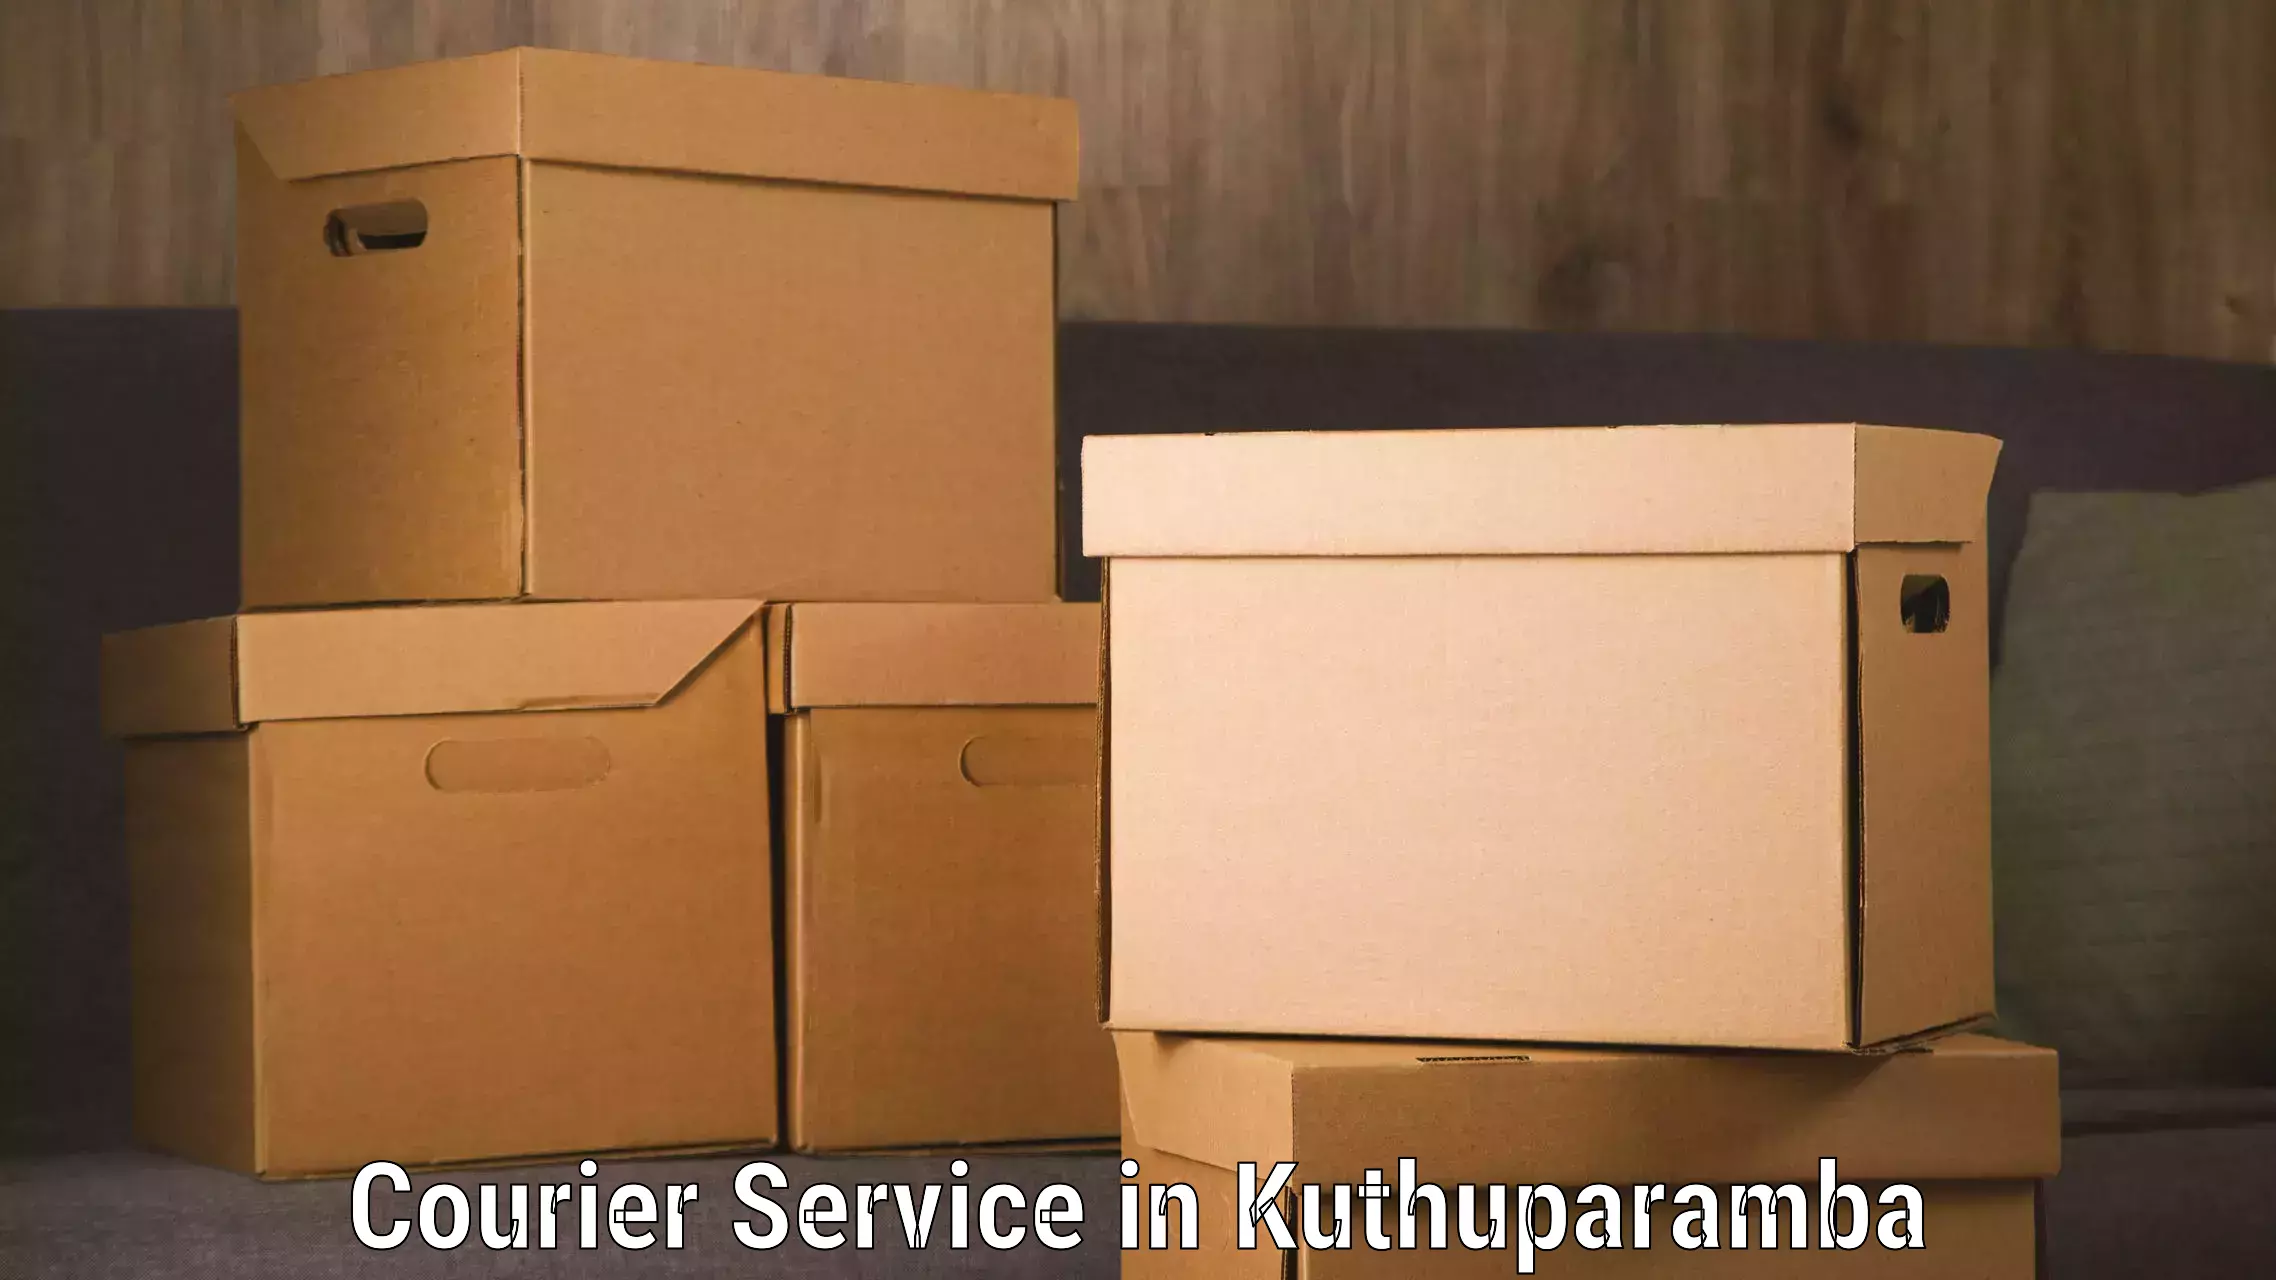 E-commerce logistics support in Kuthuparamba